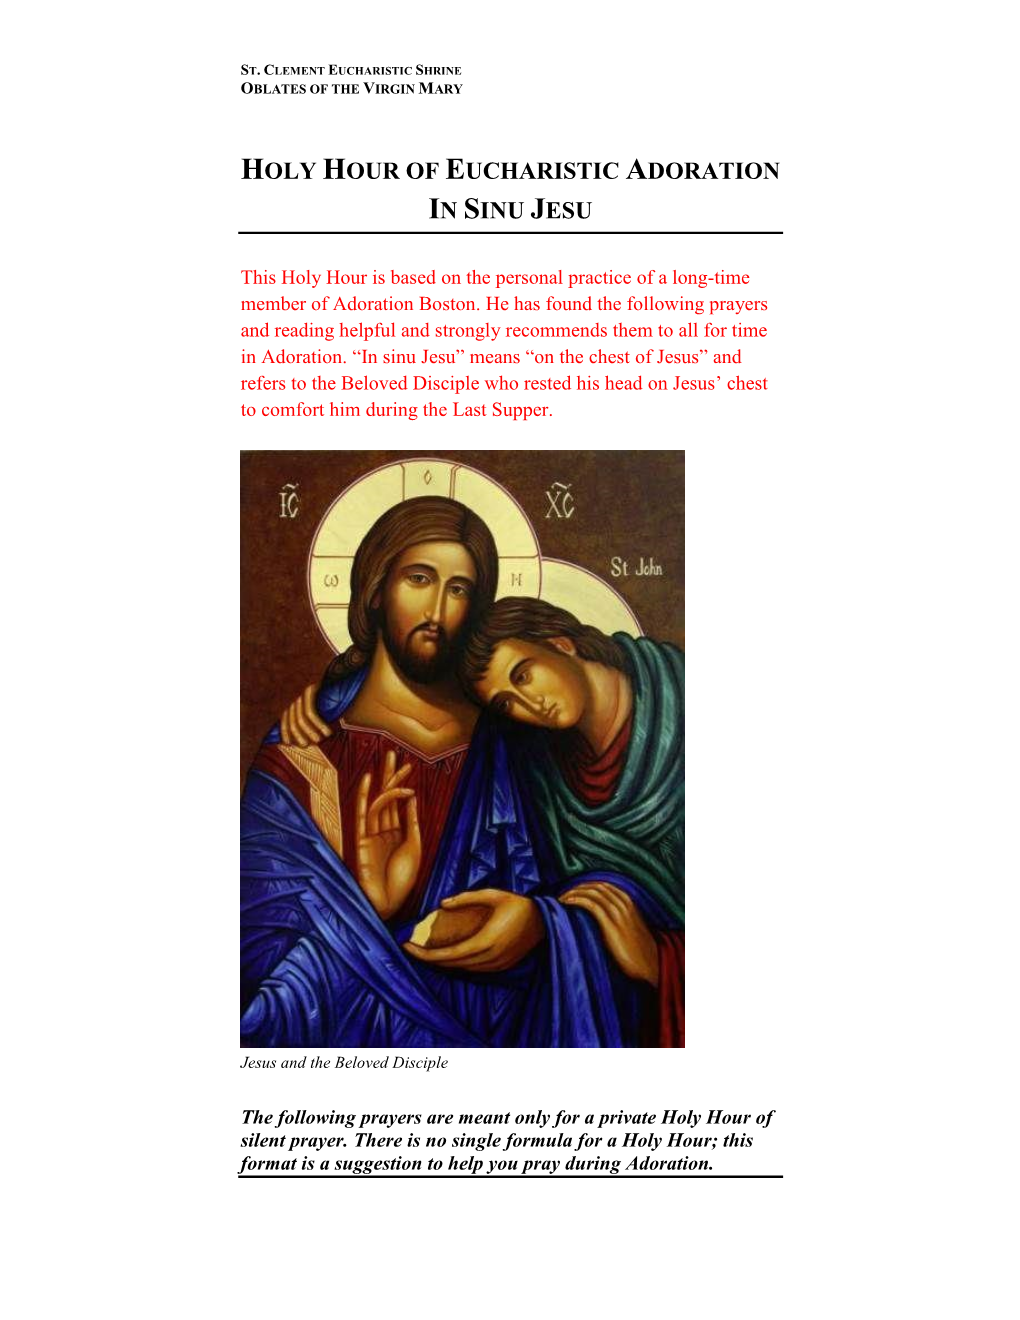 Holy Hour of Eucharistic Adoration in Sinu Jesu